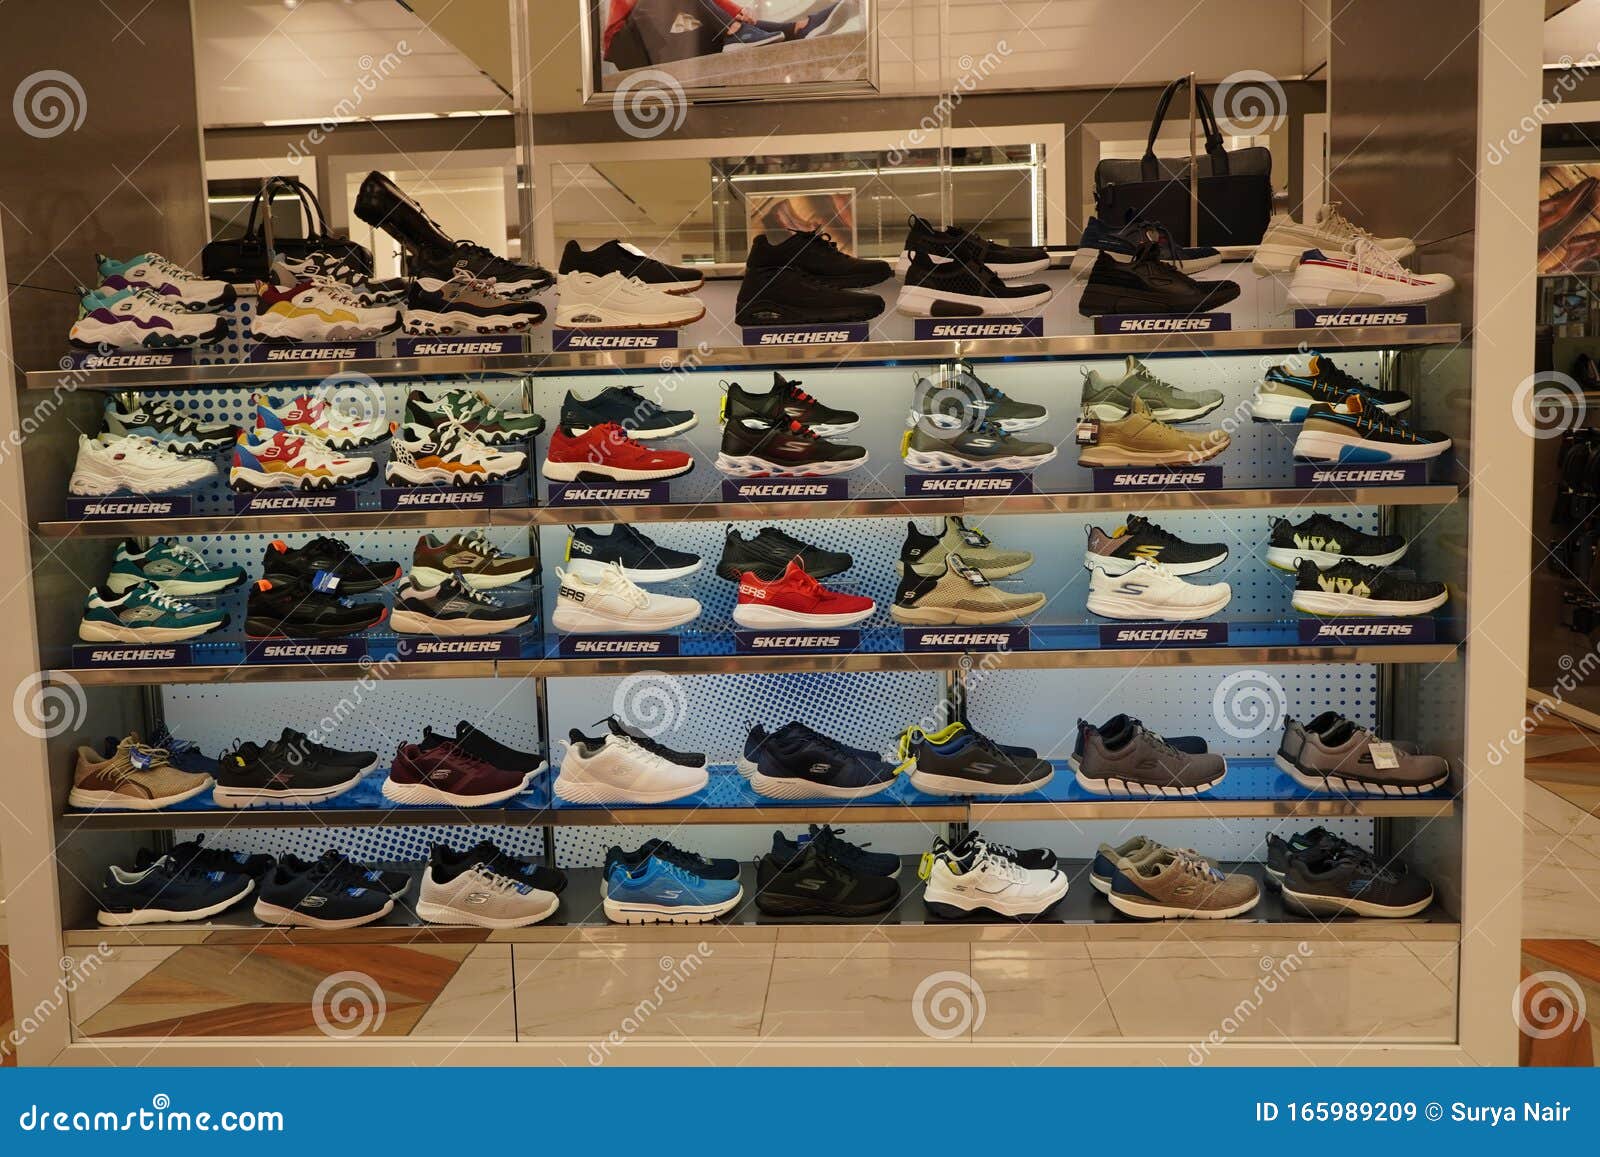 skechers shoes showroom in mumbai